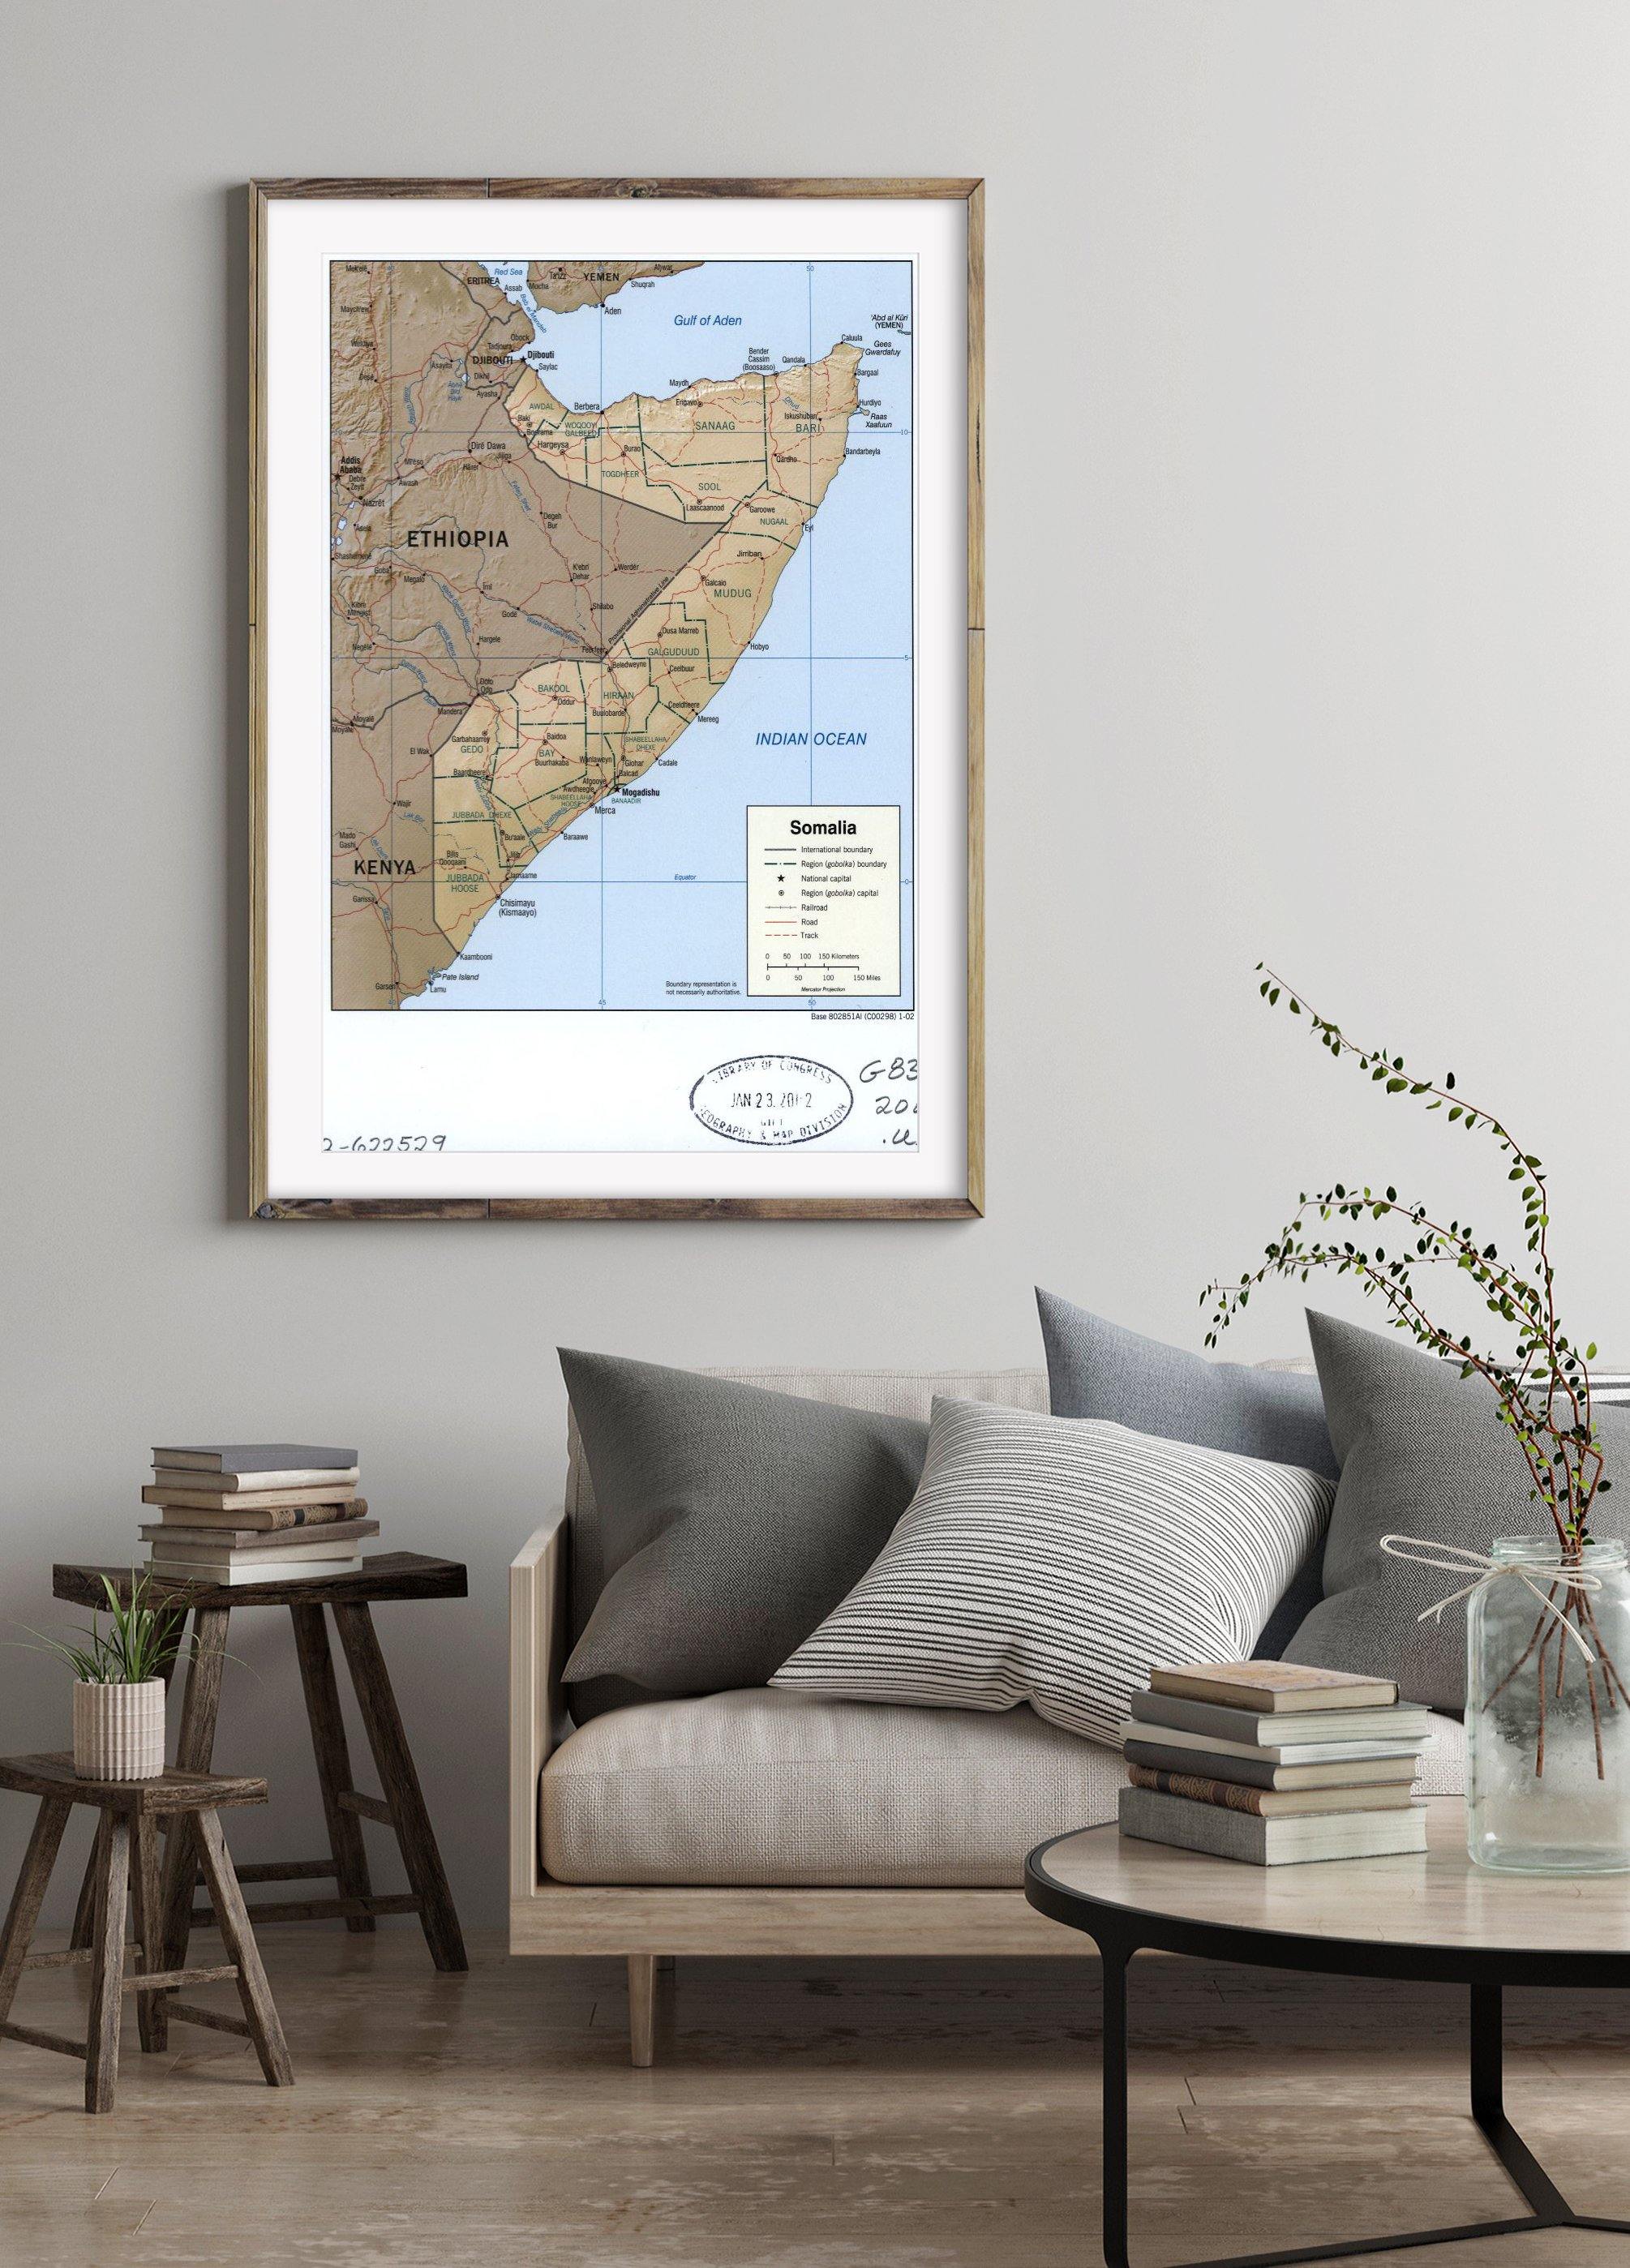 2002 Map| Somalia| Somalia Map Size: 16 inches x 24 inches |Fits 16x24 - New York Map Company